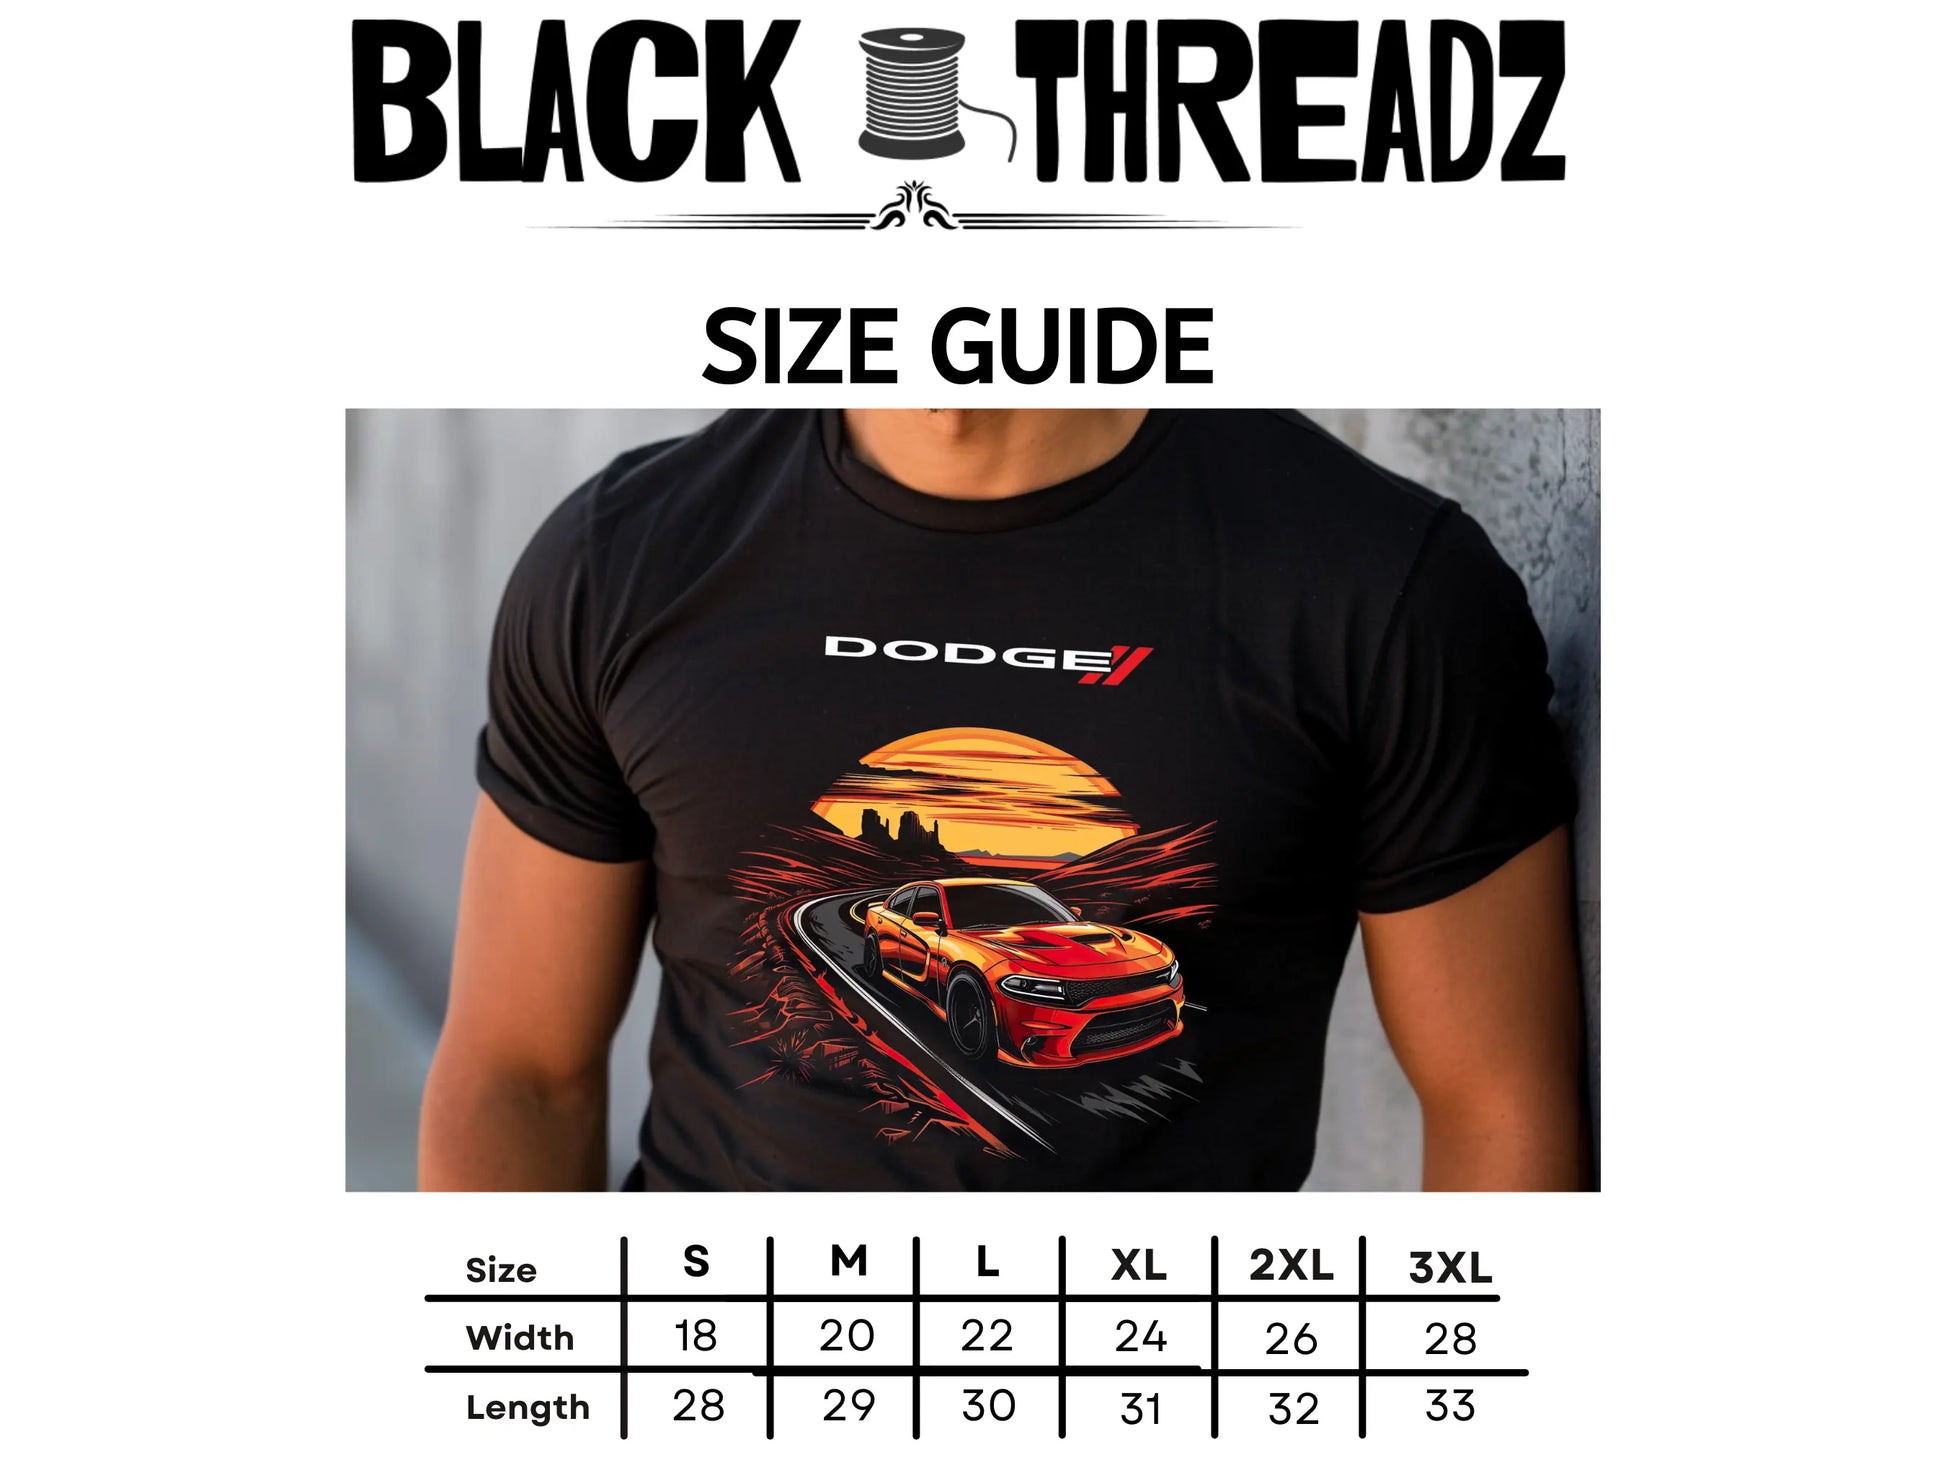 Black Jesus T-Shirt: Reverent and Stylish Tee for All - Black Threadz